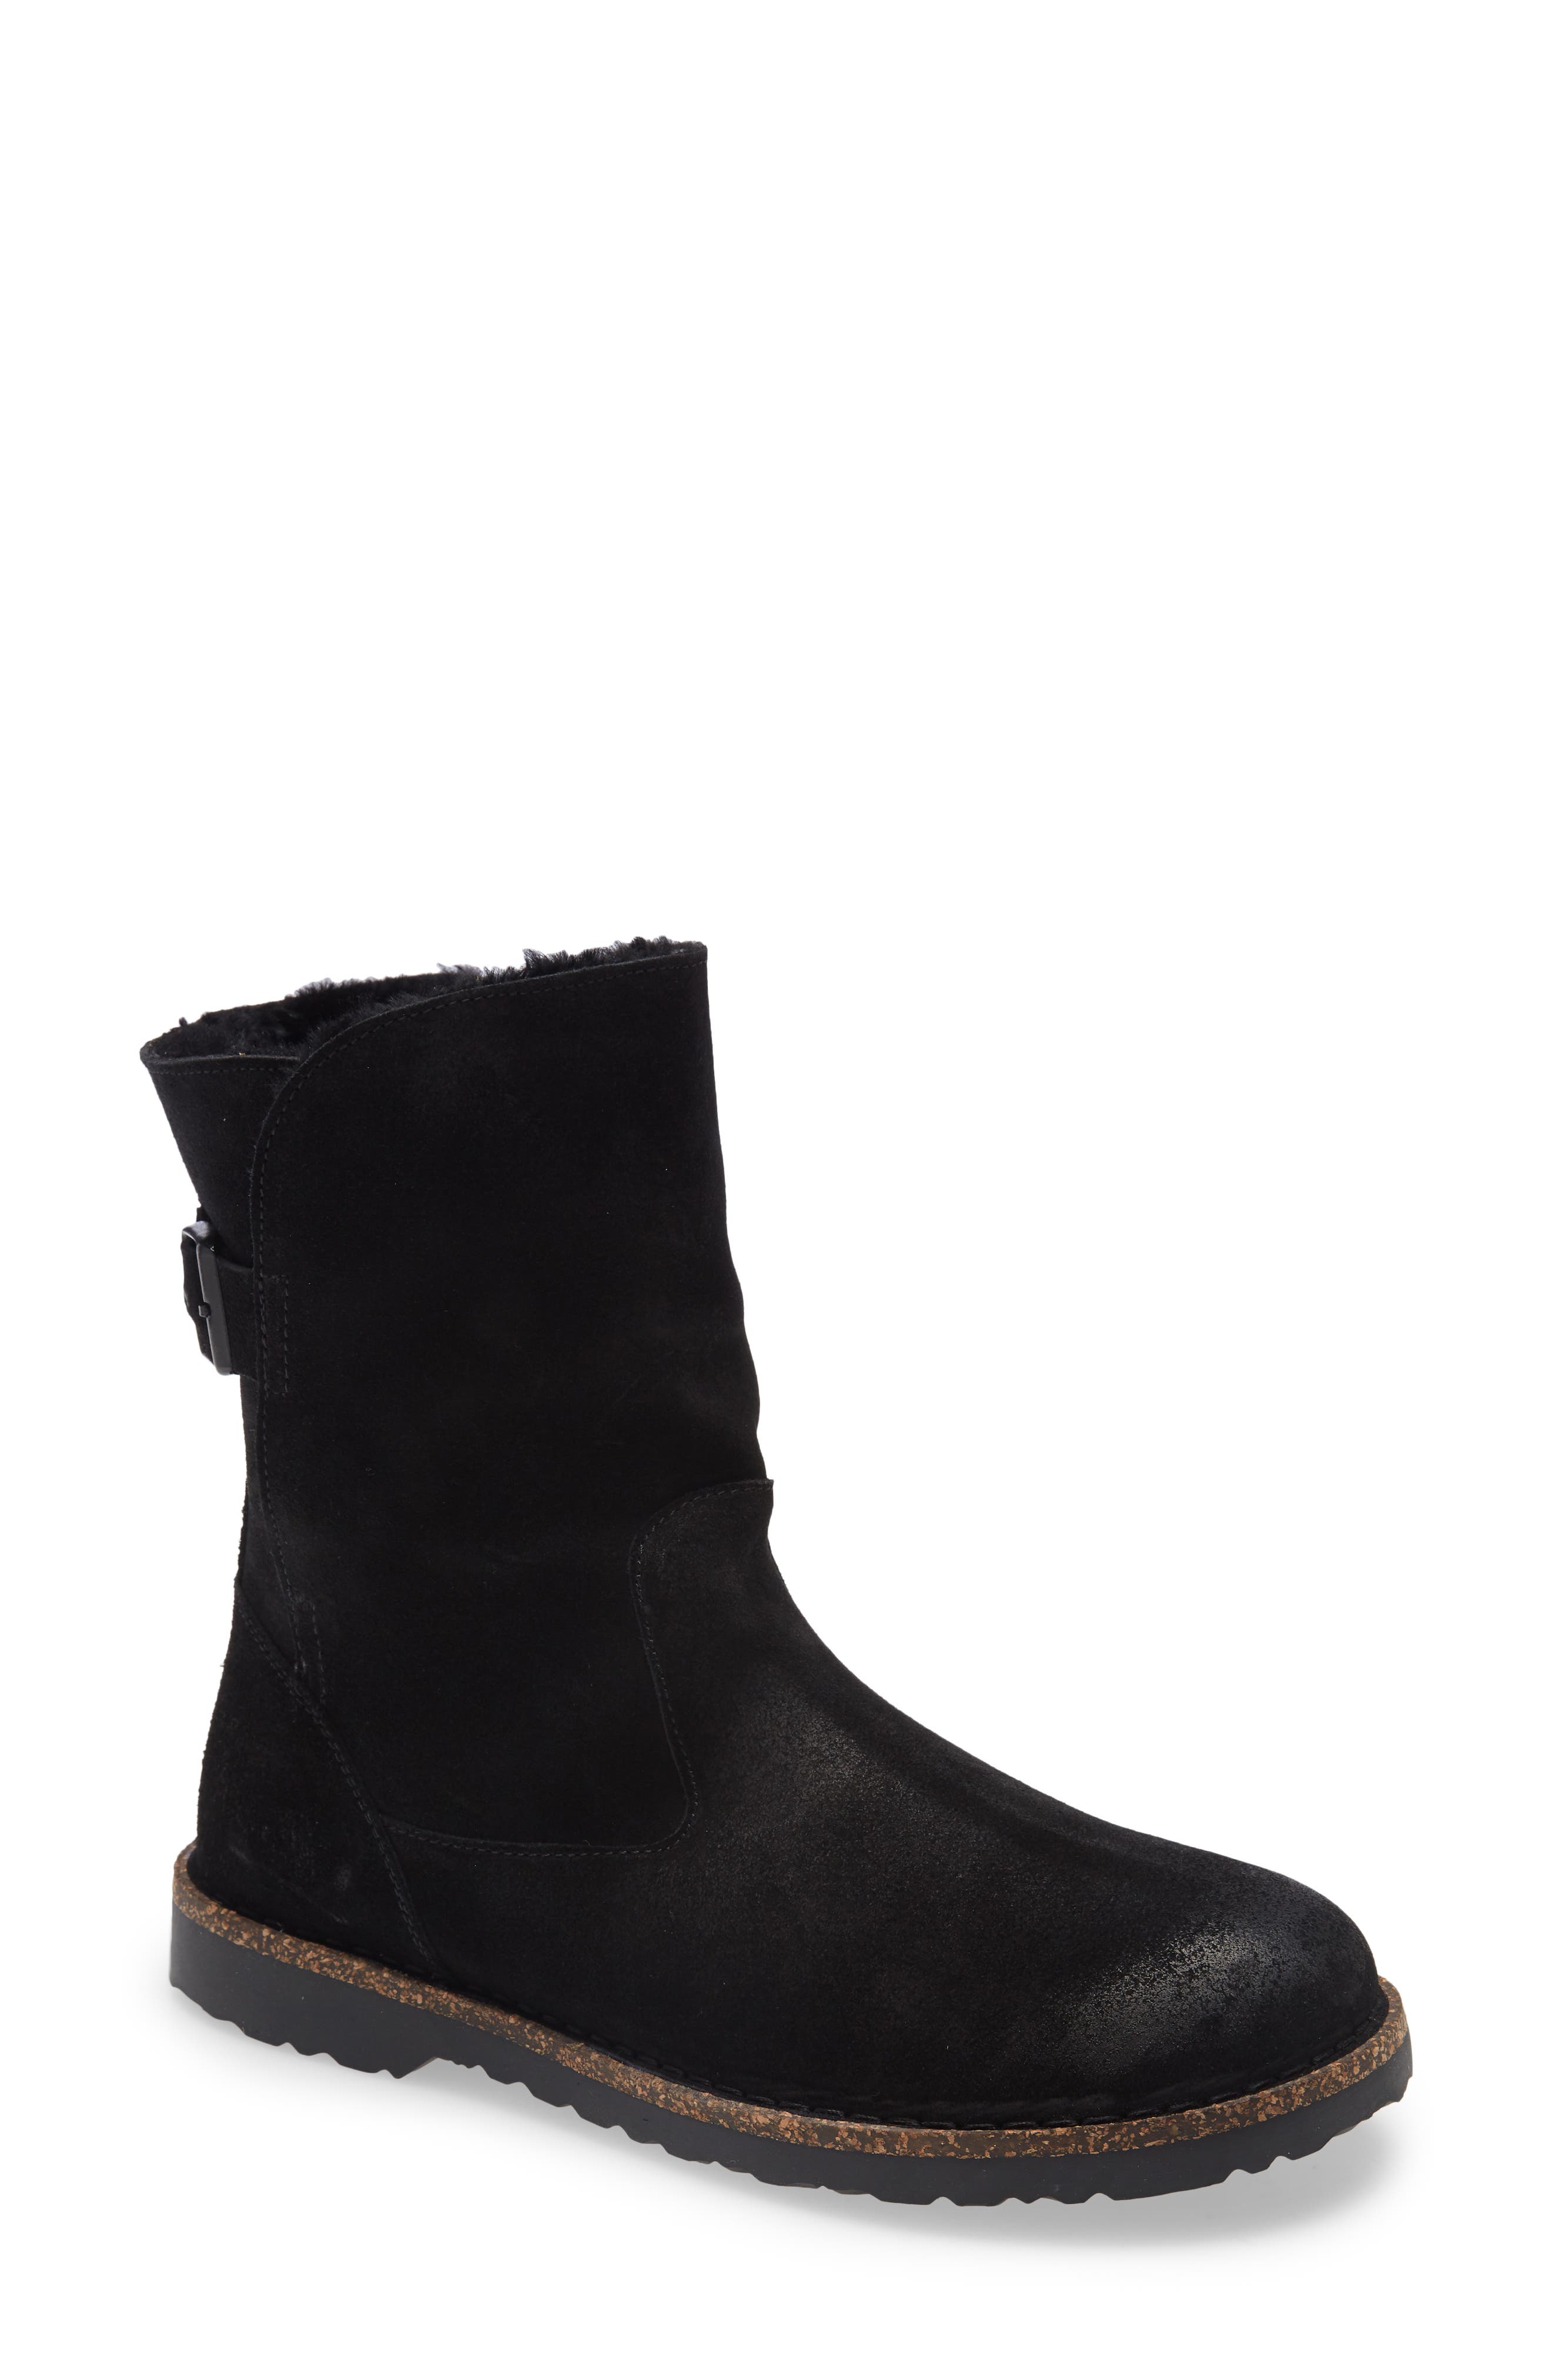 Birkenstock Upsalla Genuine Shearling Suede Boot in Black/Black at Nordstrom, Size 5-5.5Us